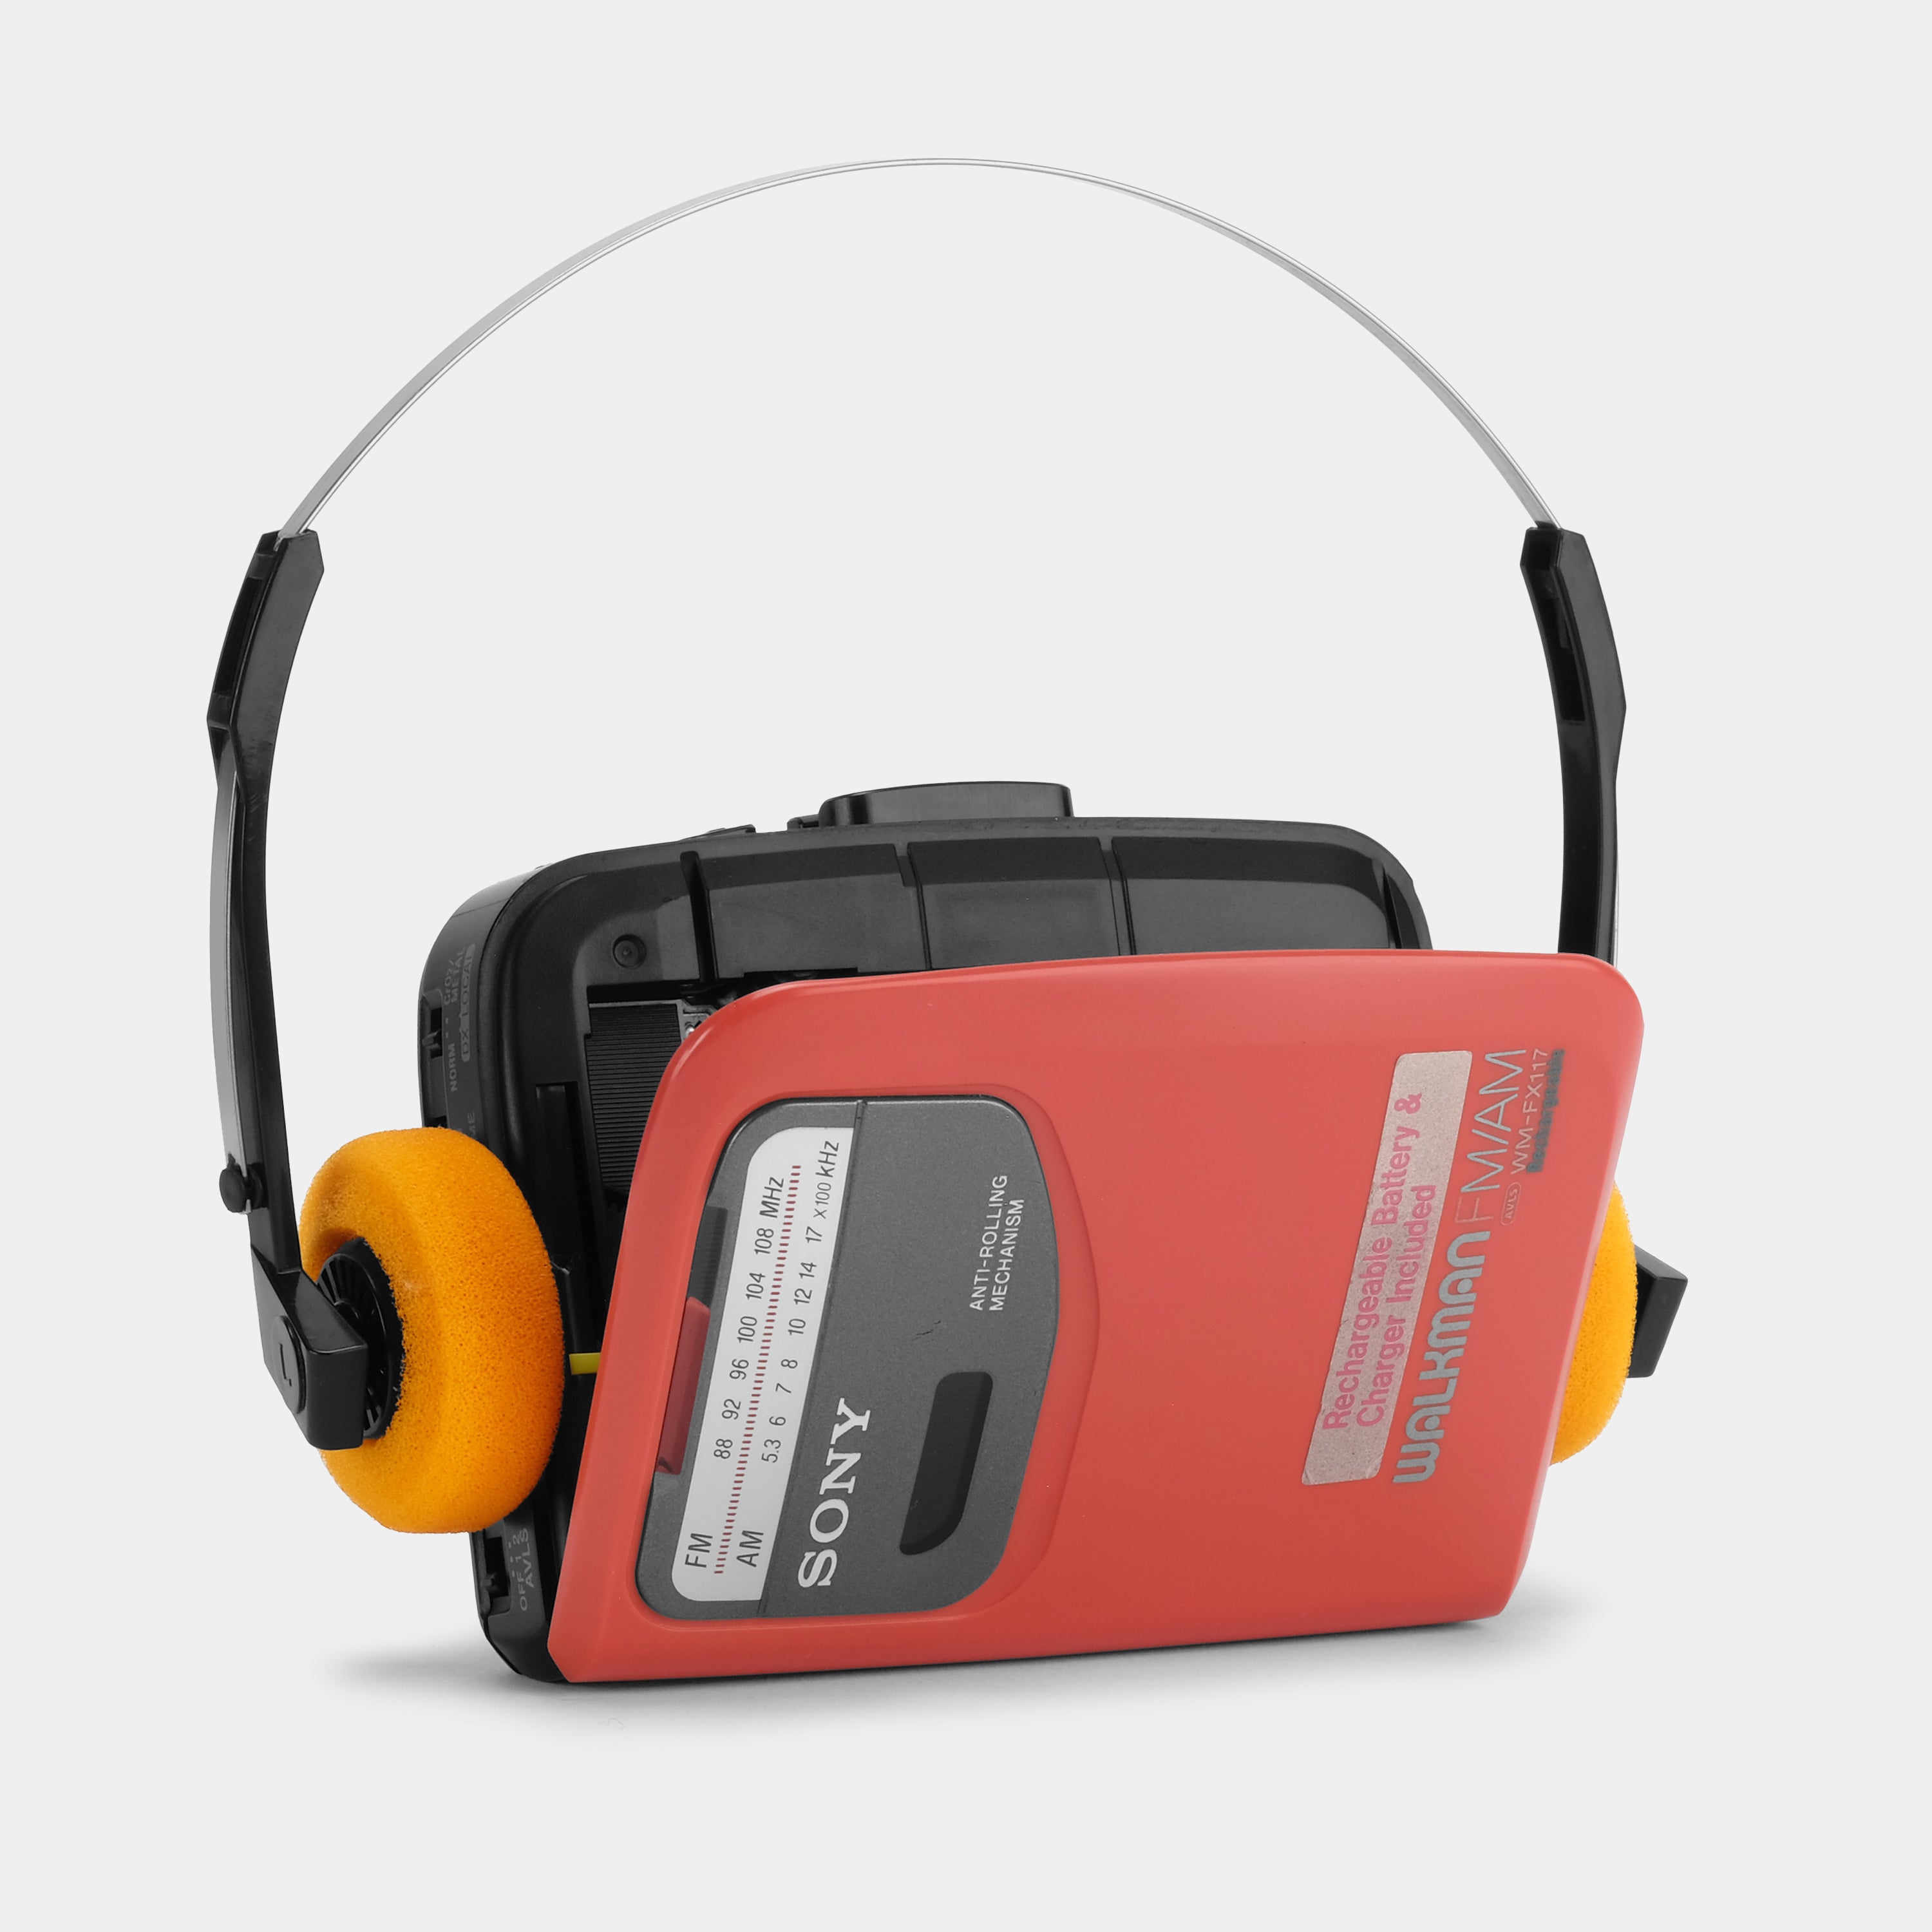 Sony Walkman WM-FX117 AM/FM Red Portable Cassette Player